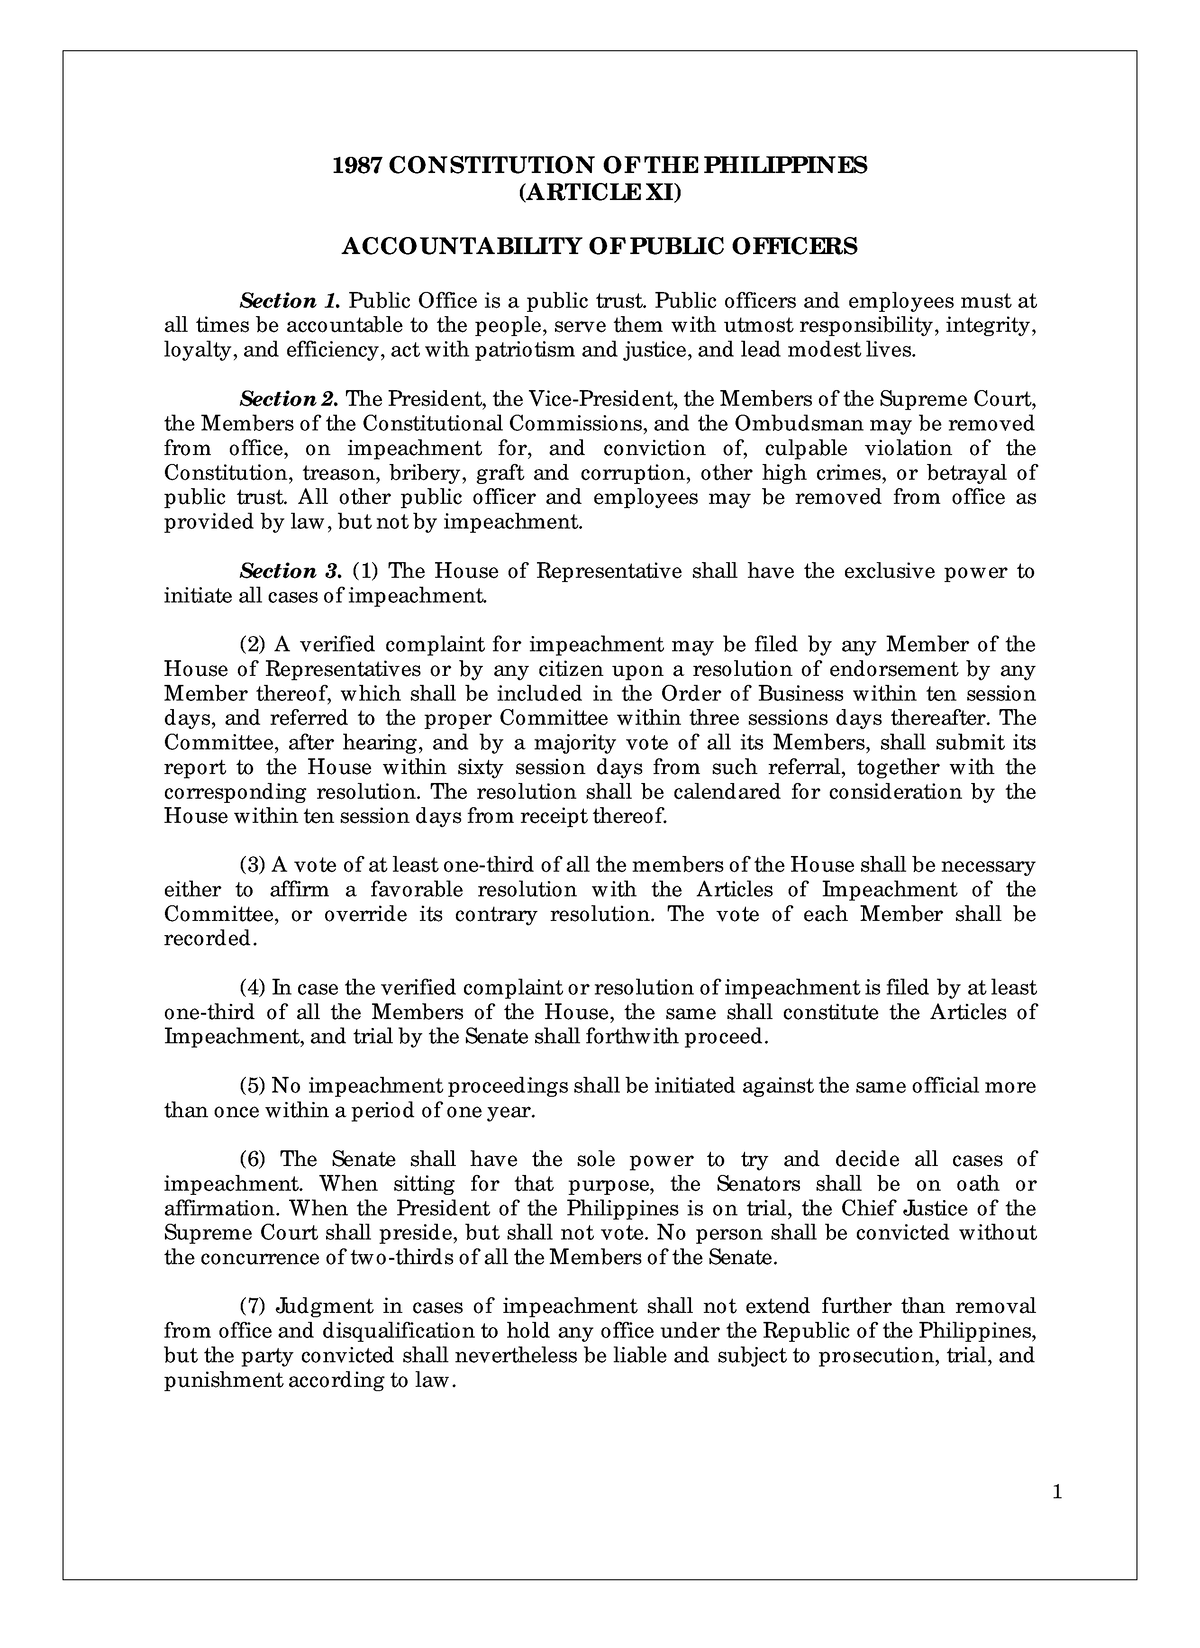 article-xi-1987-philippine-constitution-1987-constitution-of-the